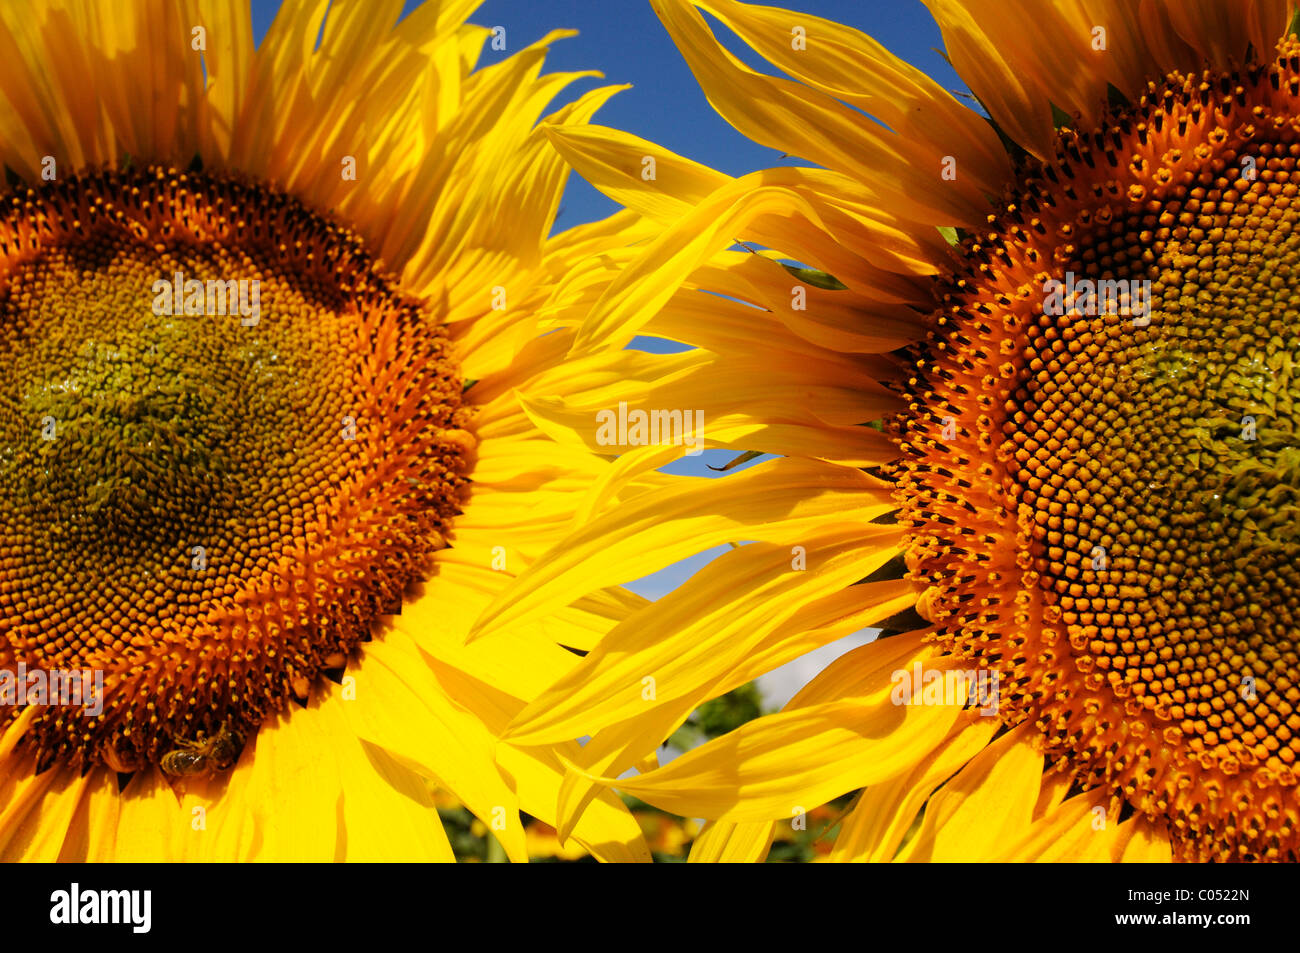 Sunflowers against a clear blue sky Stock Photo